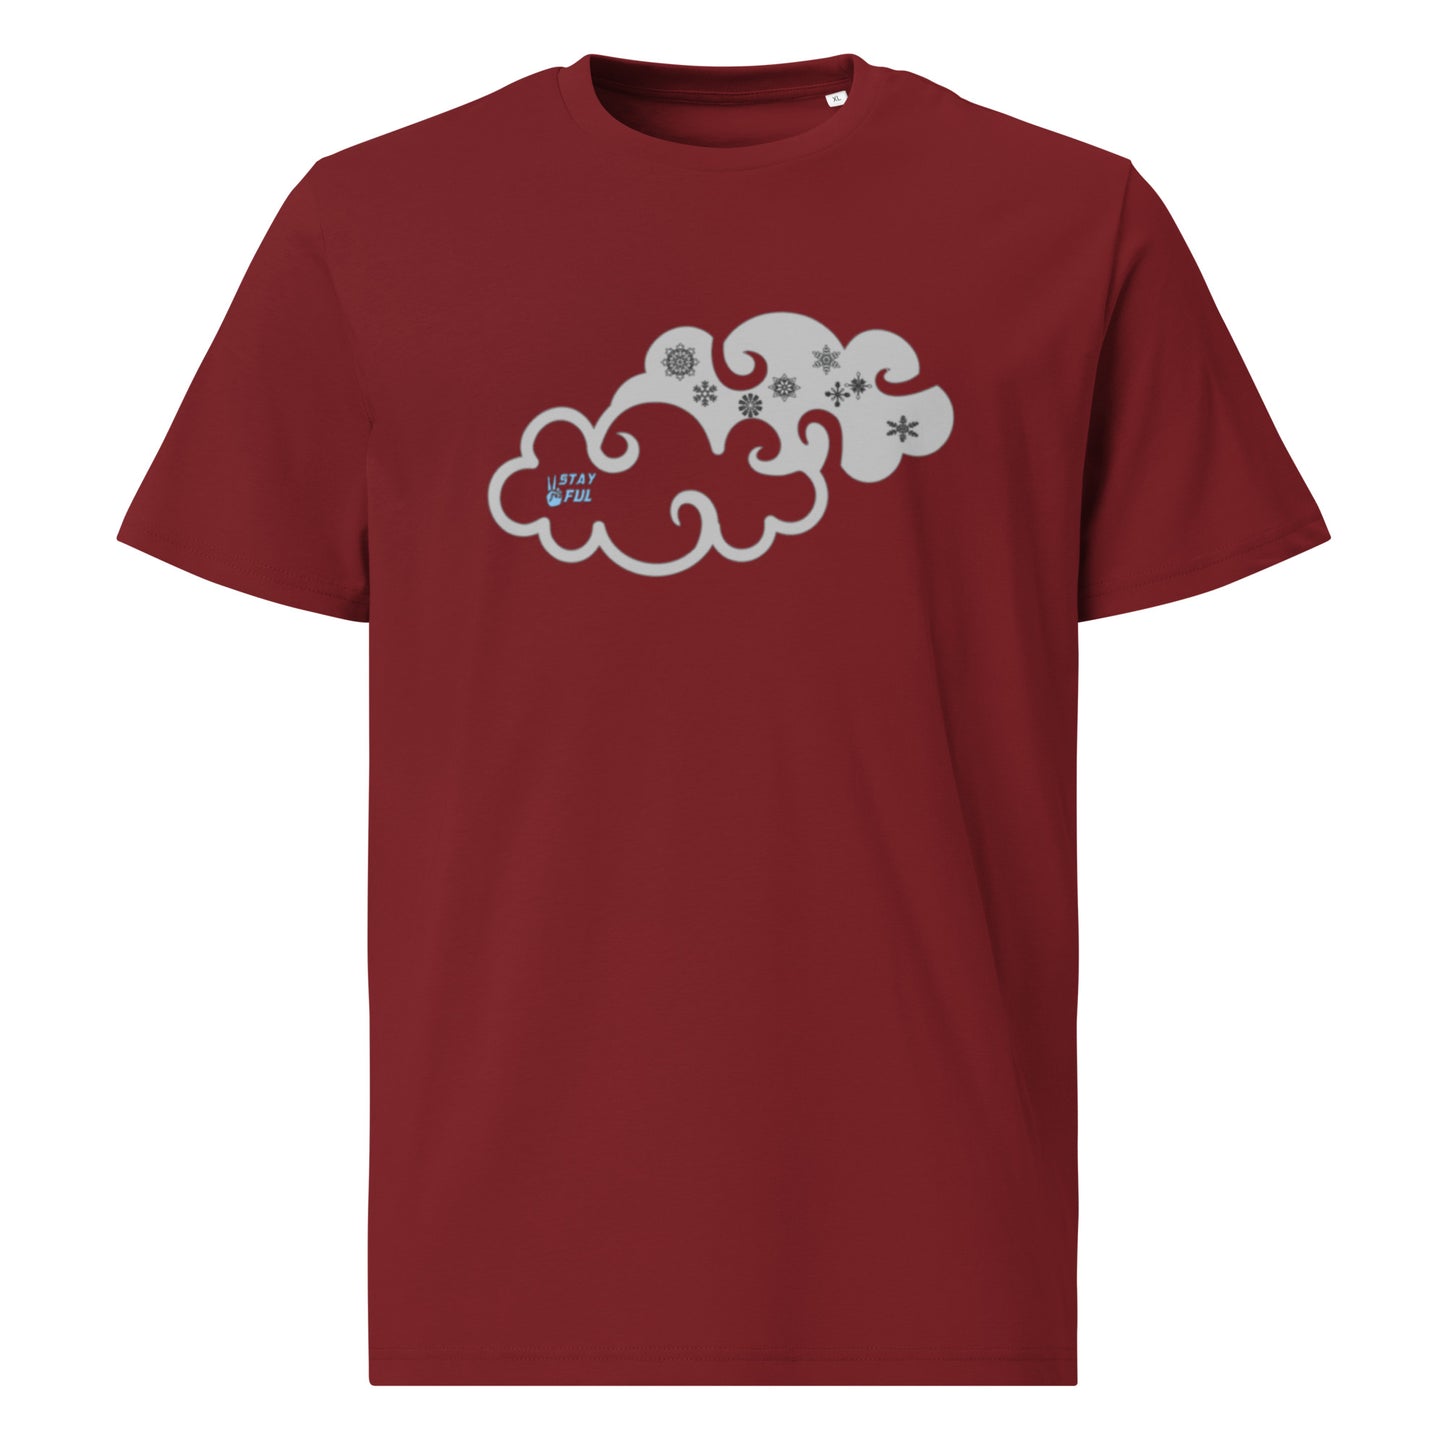 Unisex Peaceful Minimalistic Cloud organic cotton t-shirt